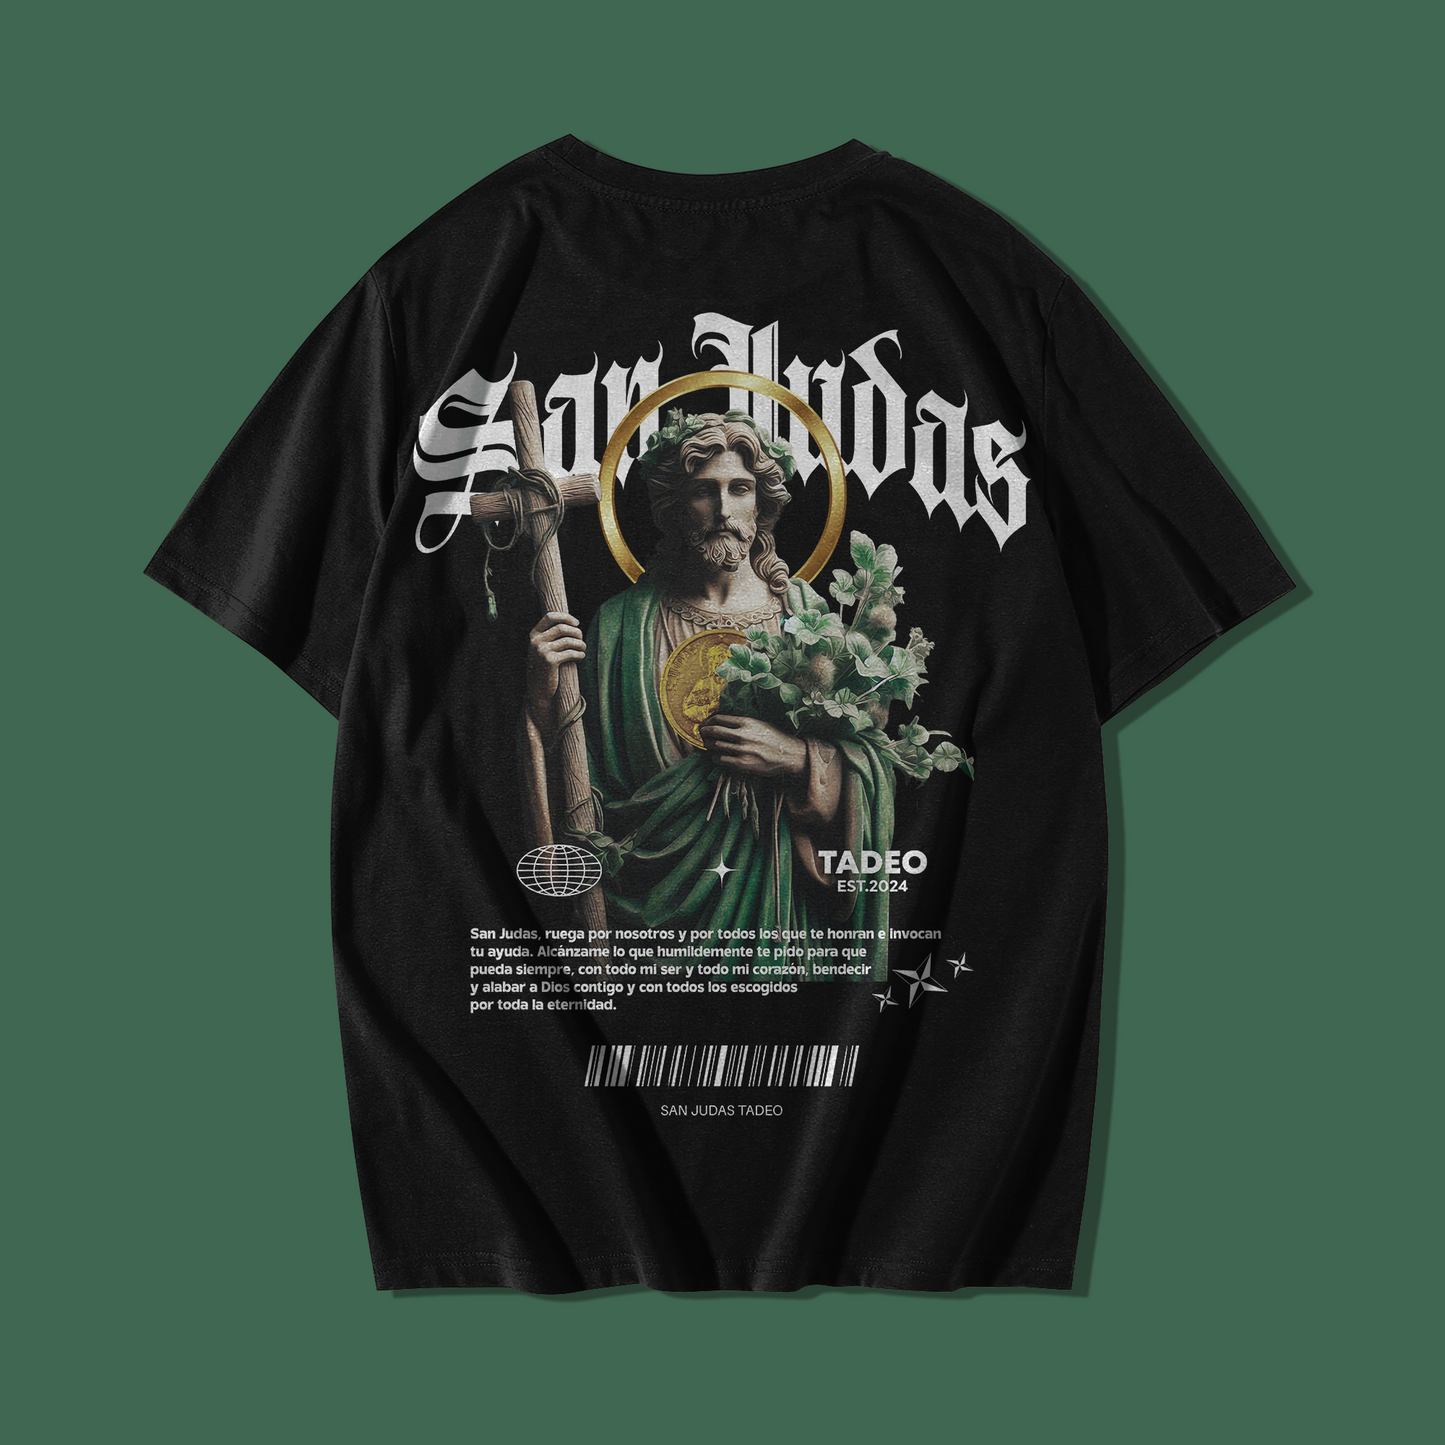 San Judas Premium T-Shirt